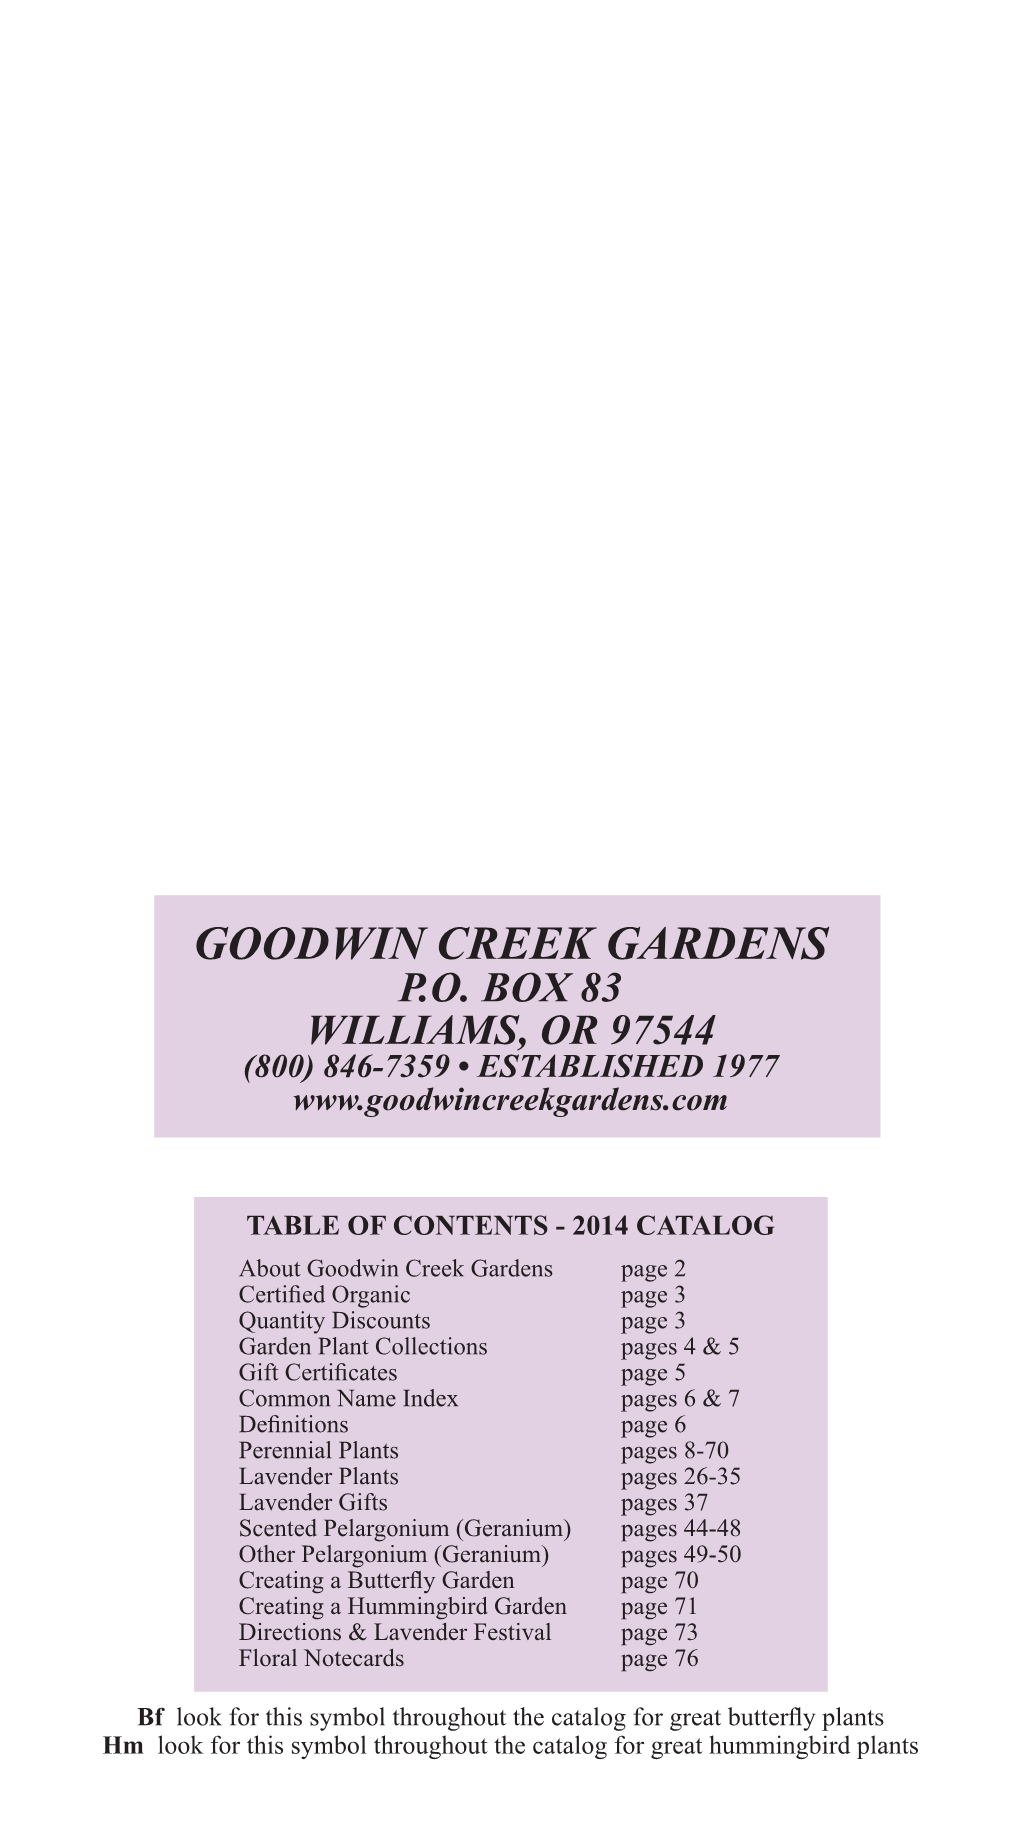 Goodwin Creek Gardens Po Box 83 Williams, Or 97544